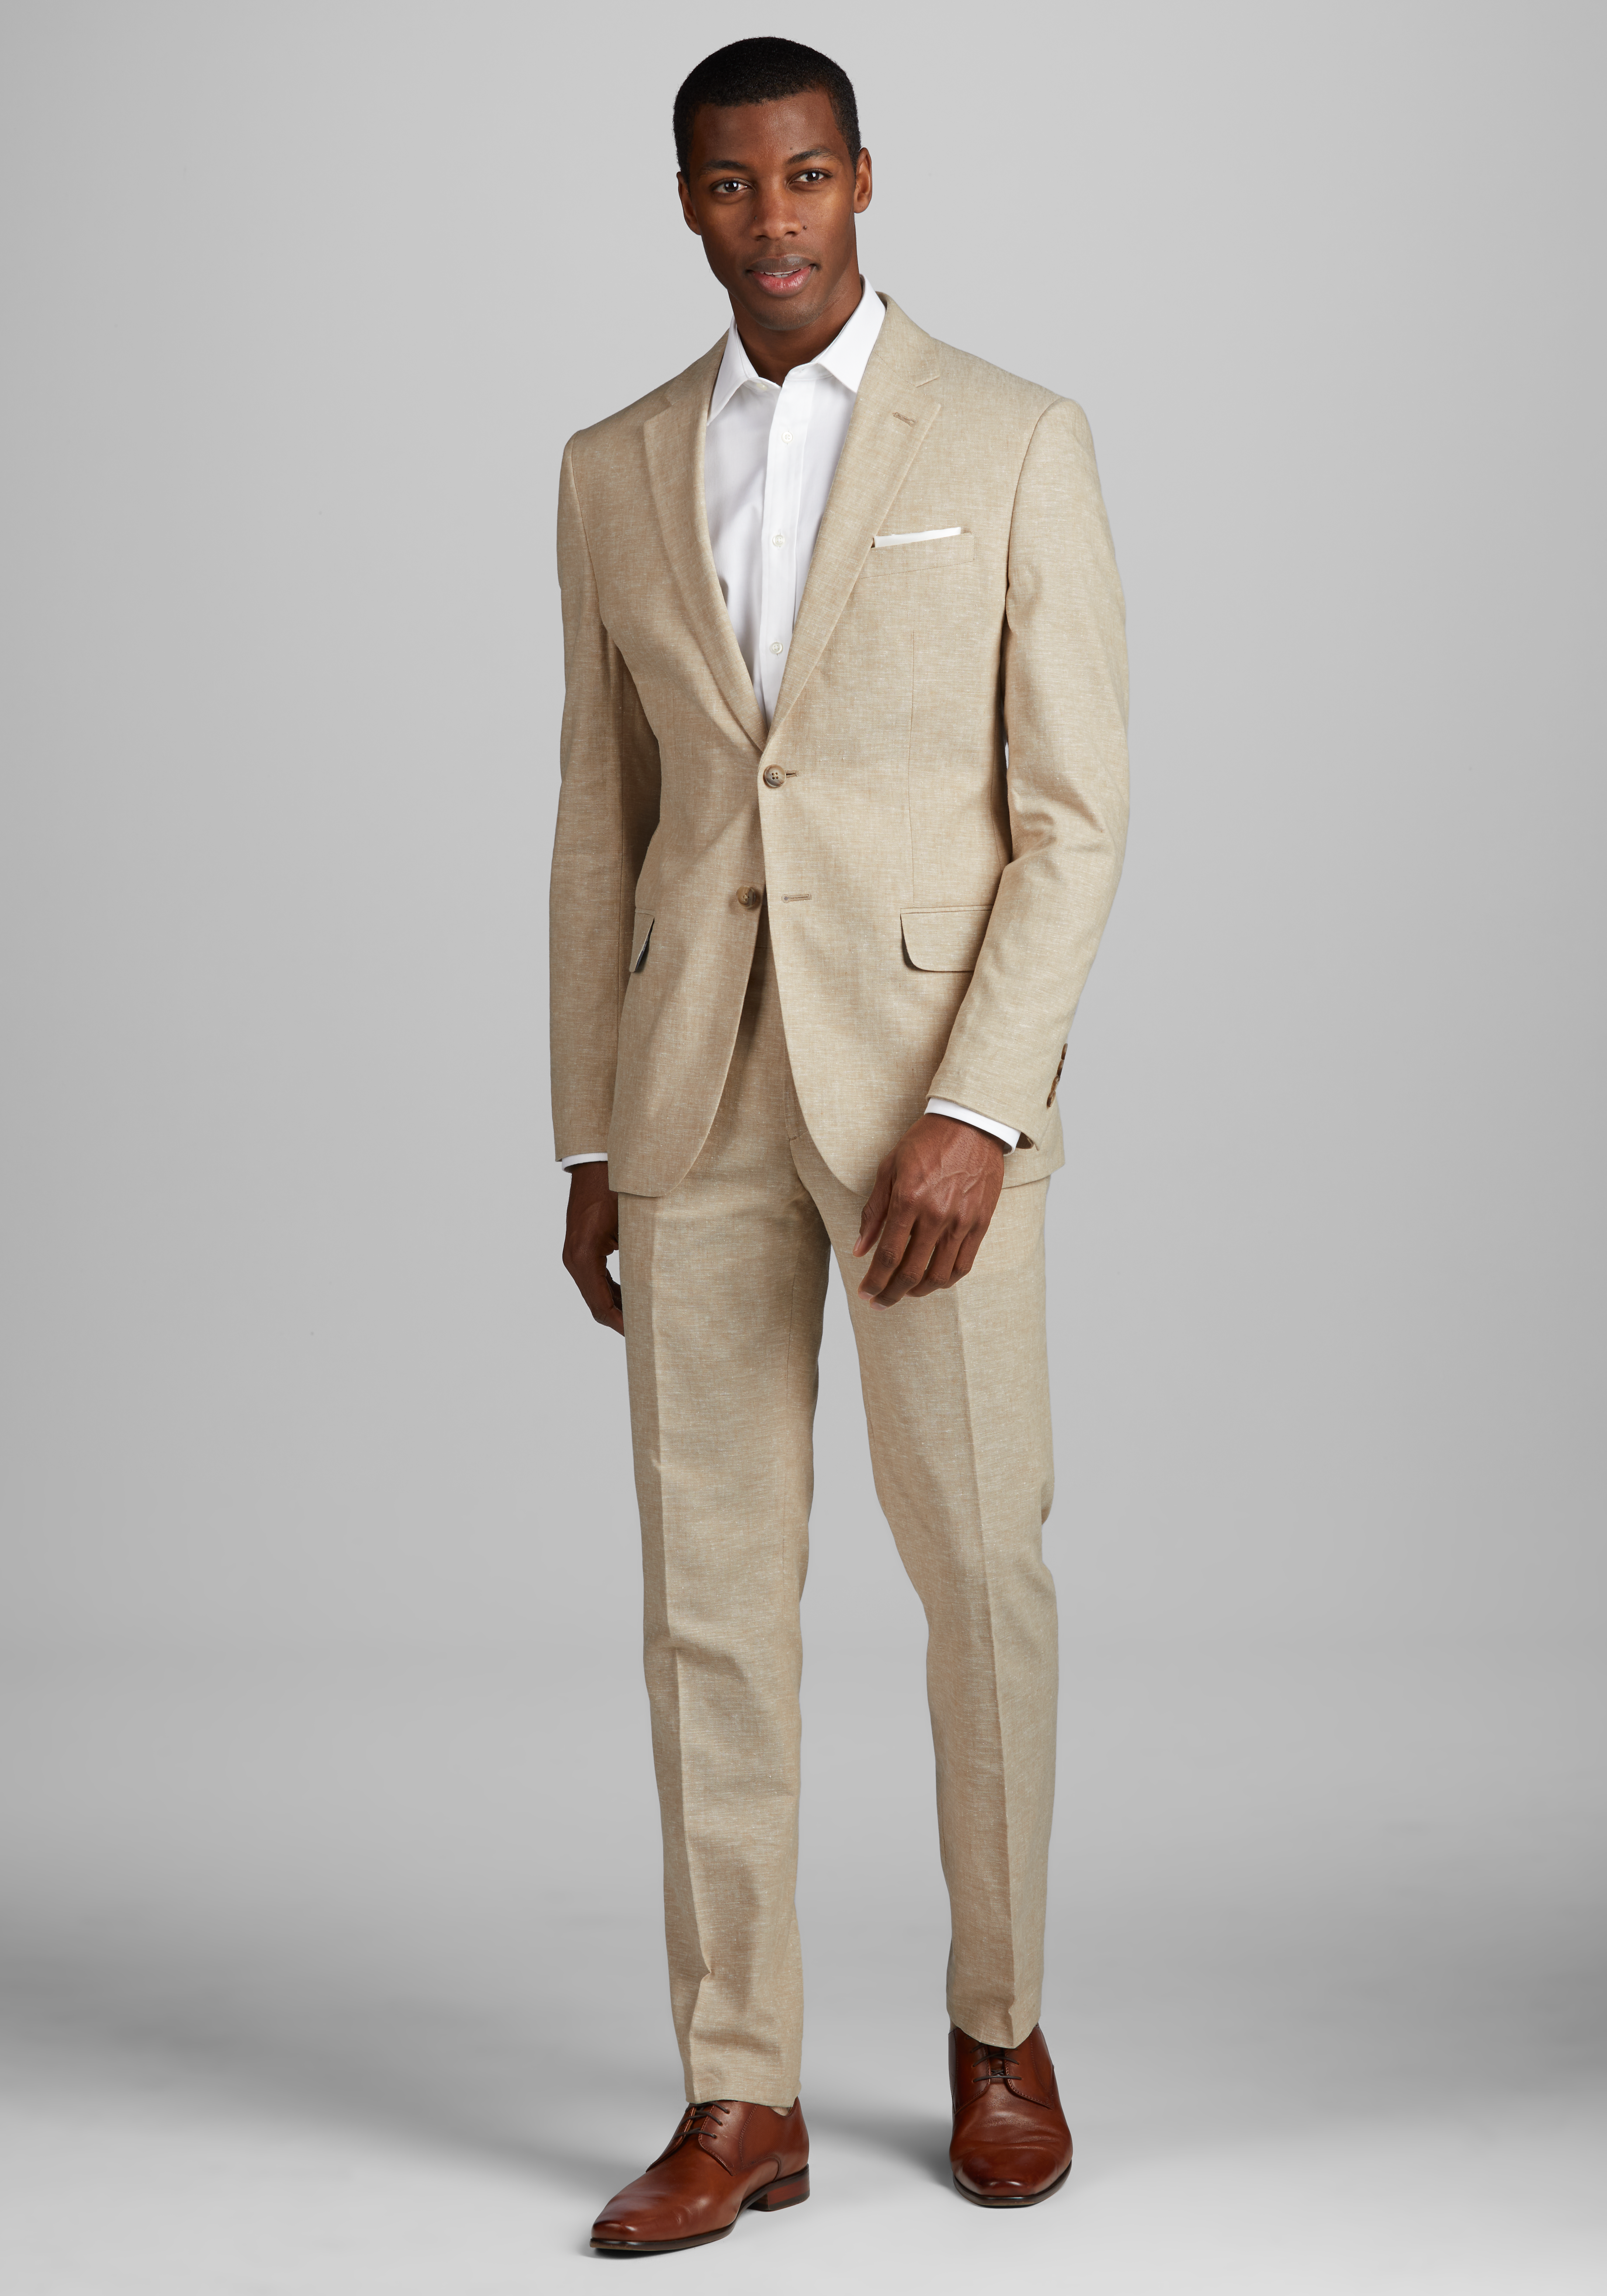 Men's Suits - Blazers, Vests & Pants - Shop Online